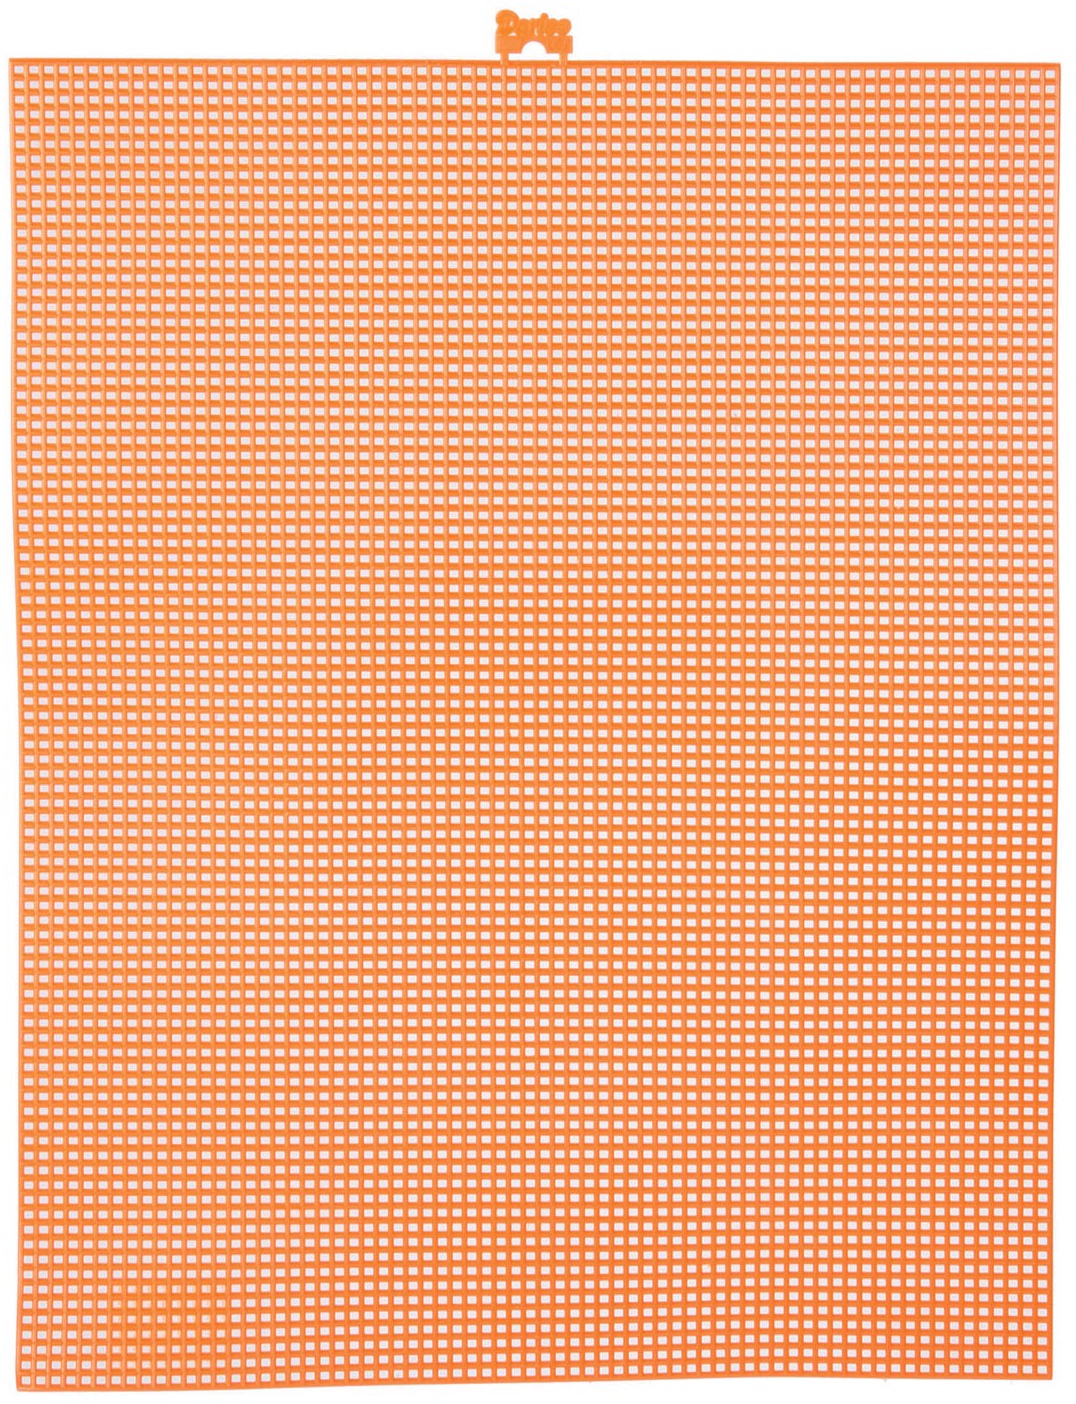 фото Канва для вышивки Darice Цветная пластиковая канва #7 (26 х 33 см., Оранжевый)